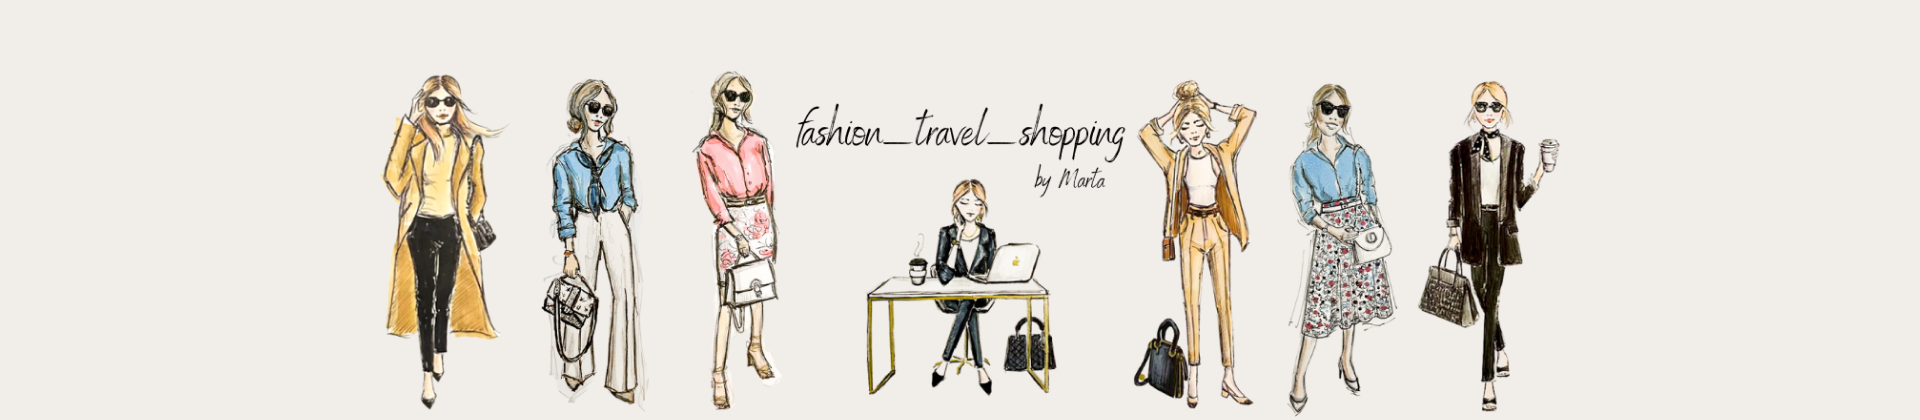 fashion_travel_shopping by Marta